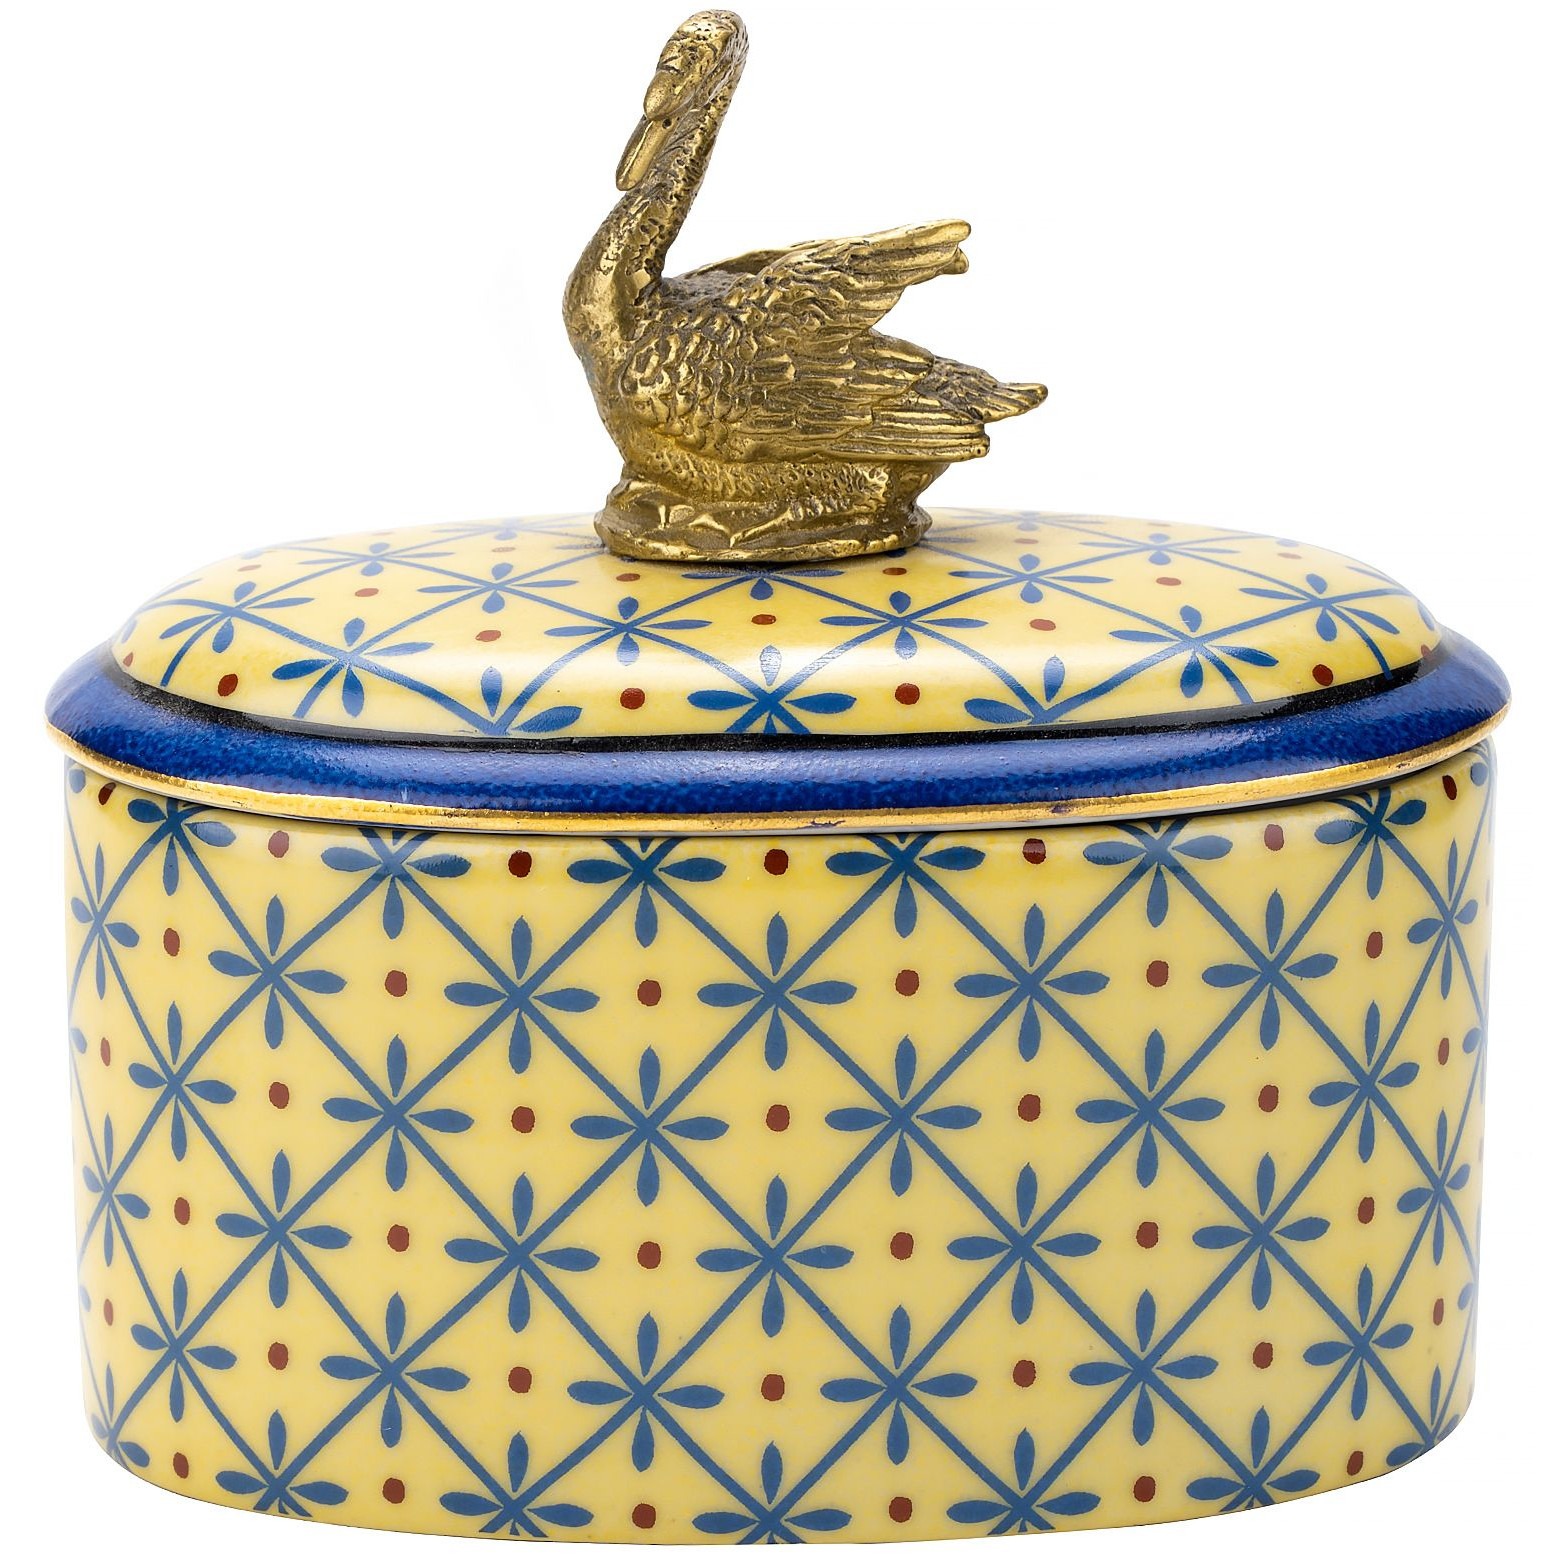 Шкатулка Glasar с лебедем желтая 13х9х12 см шкатулка glasar синяя с бронзовым ангелом и узорчатым декором 17x17x15 см